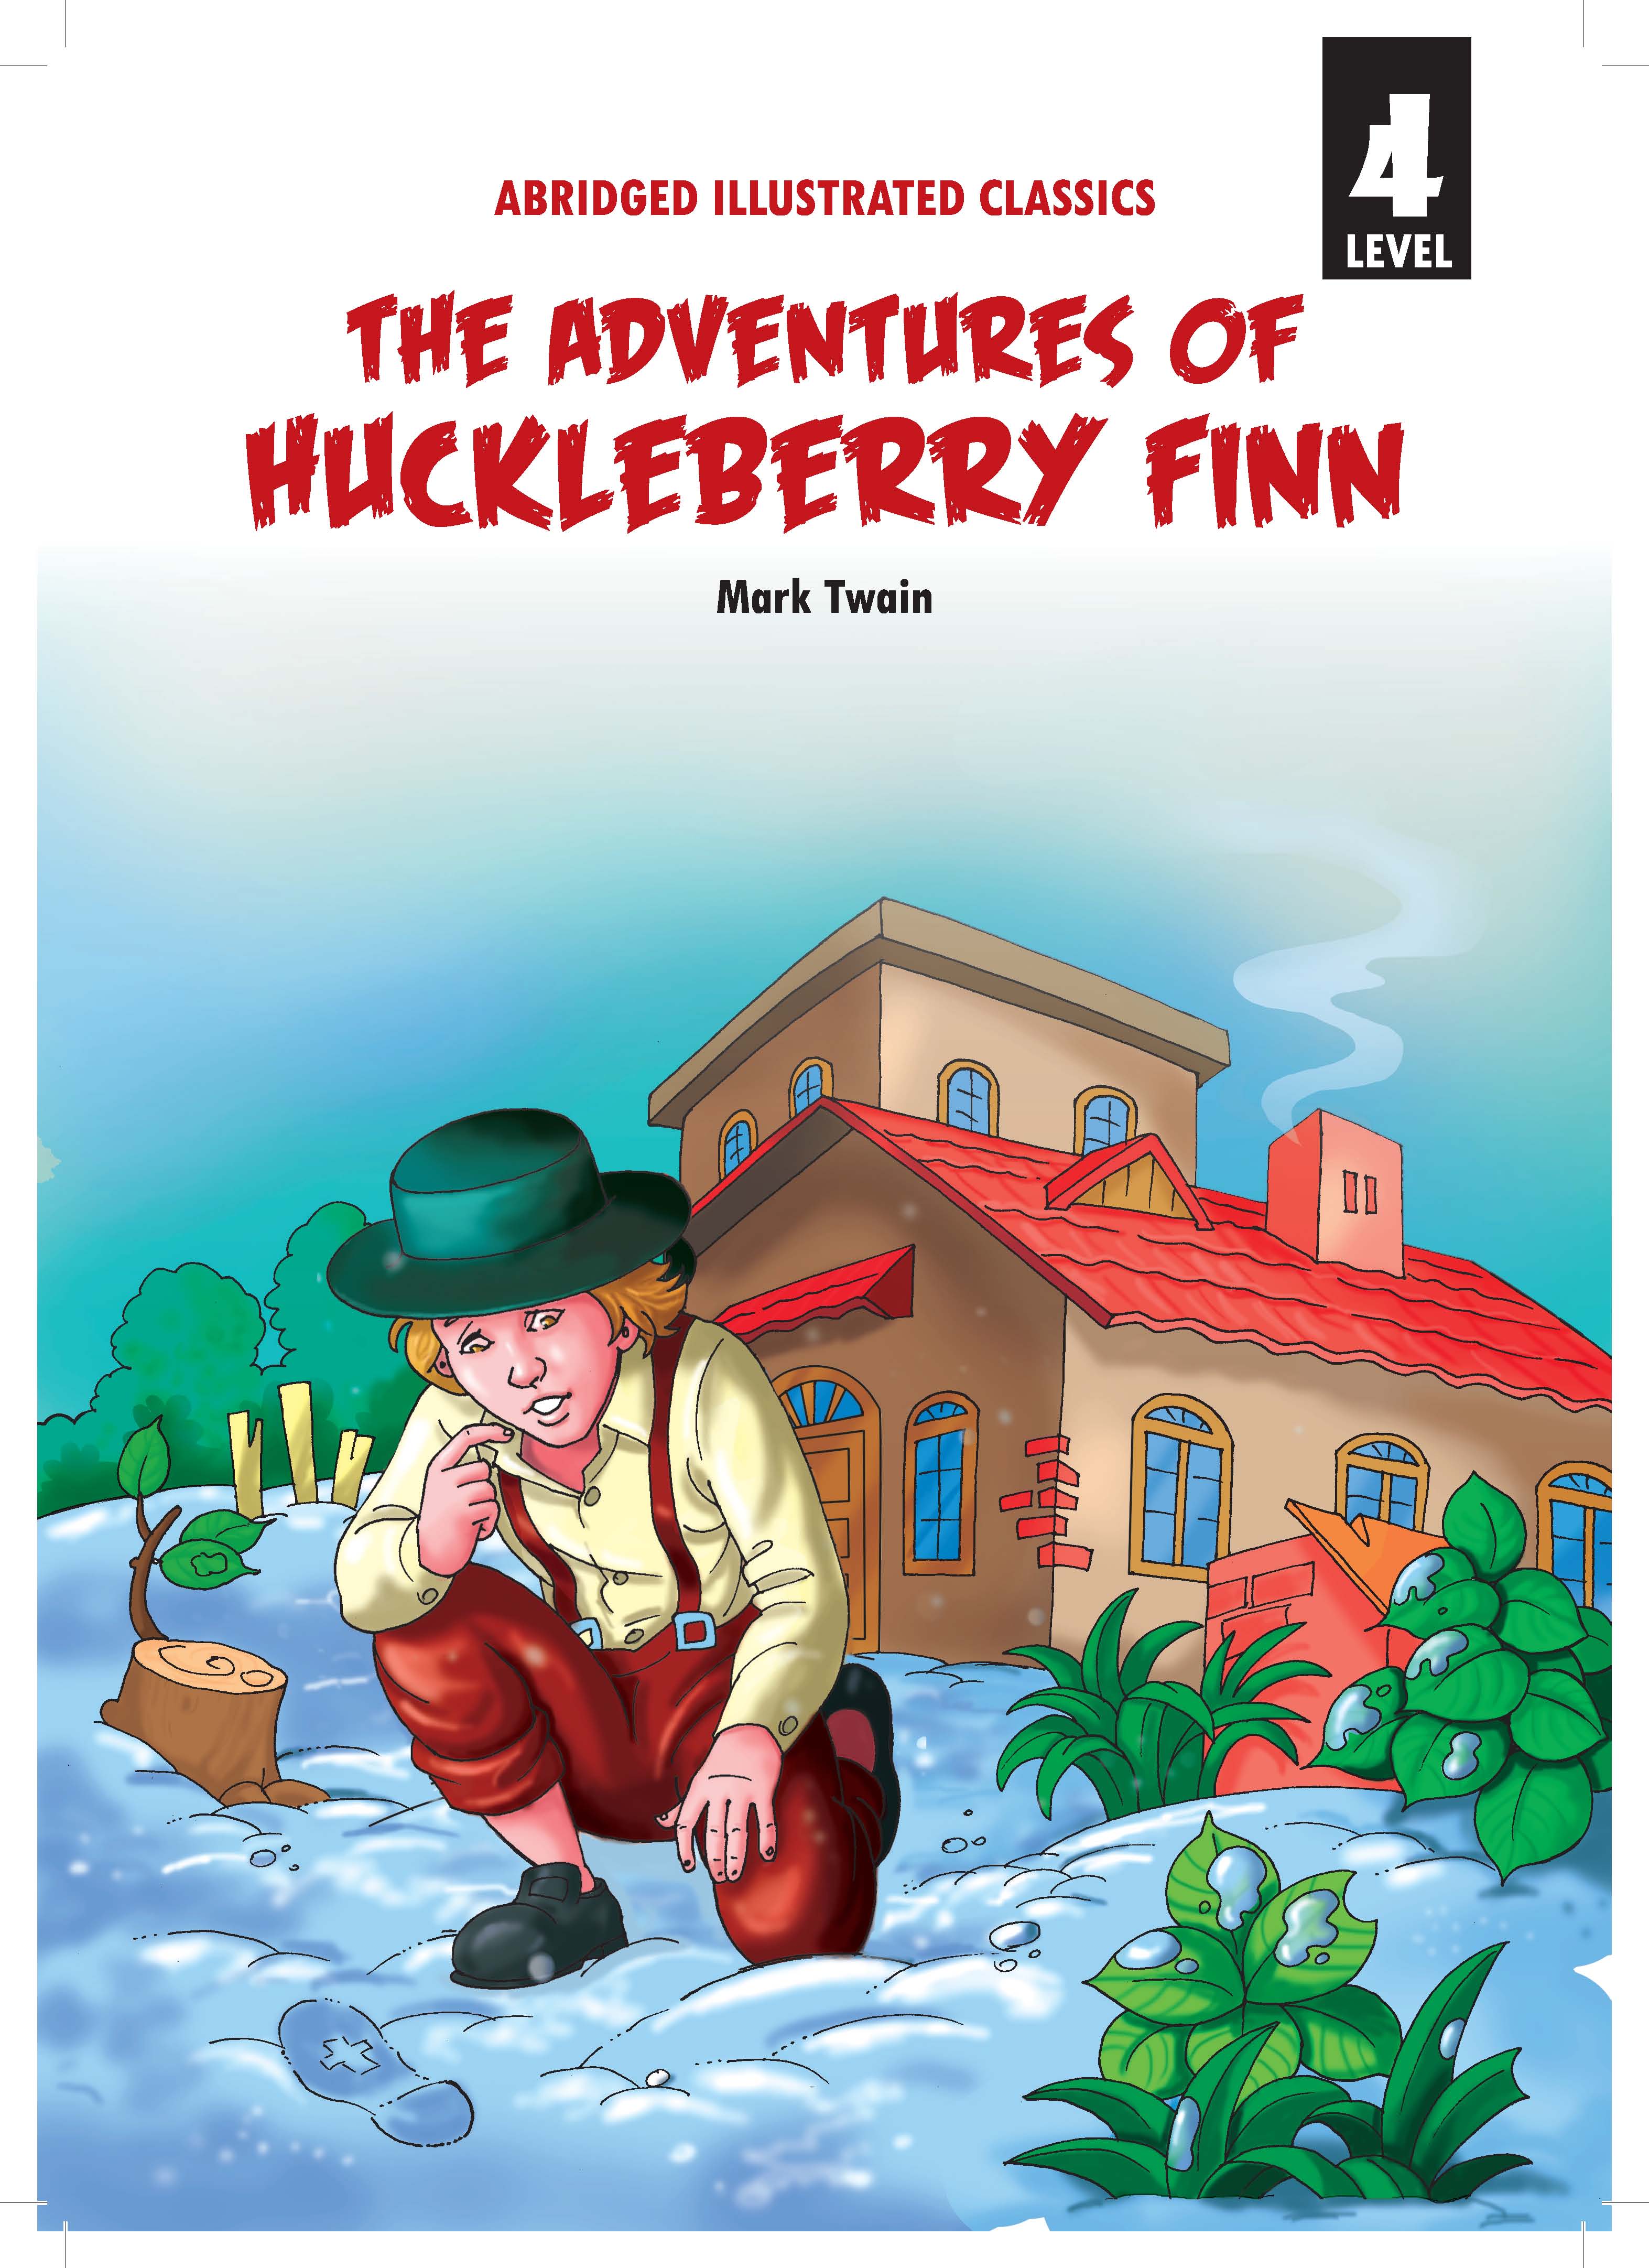 The Adventures of Huckleberry Finn Level 4 for Class 8